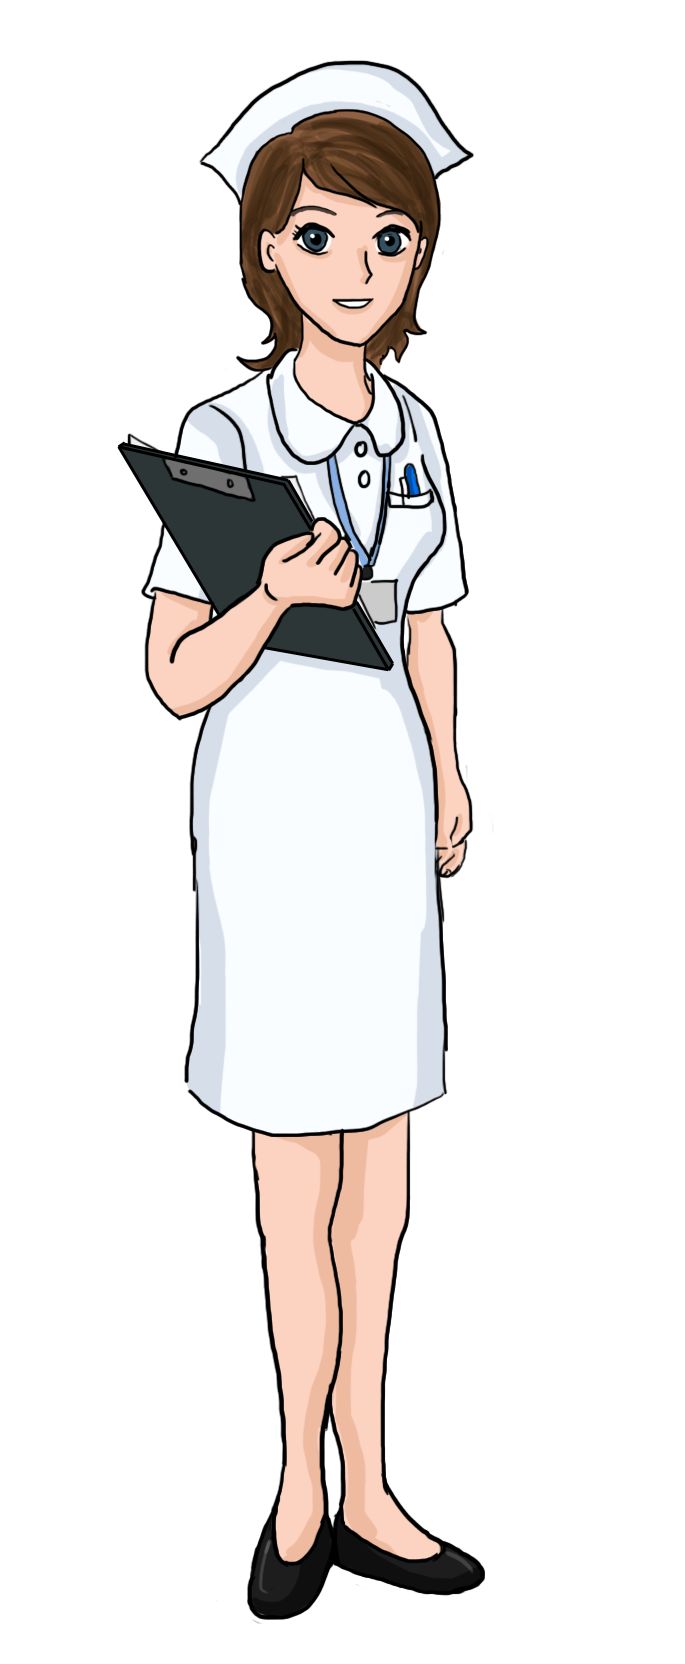 nurse clipart